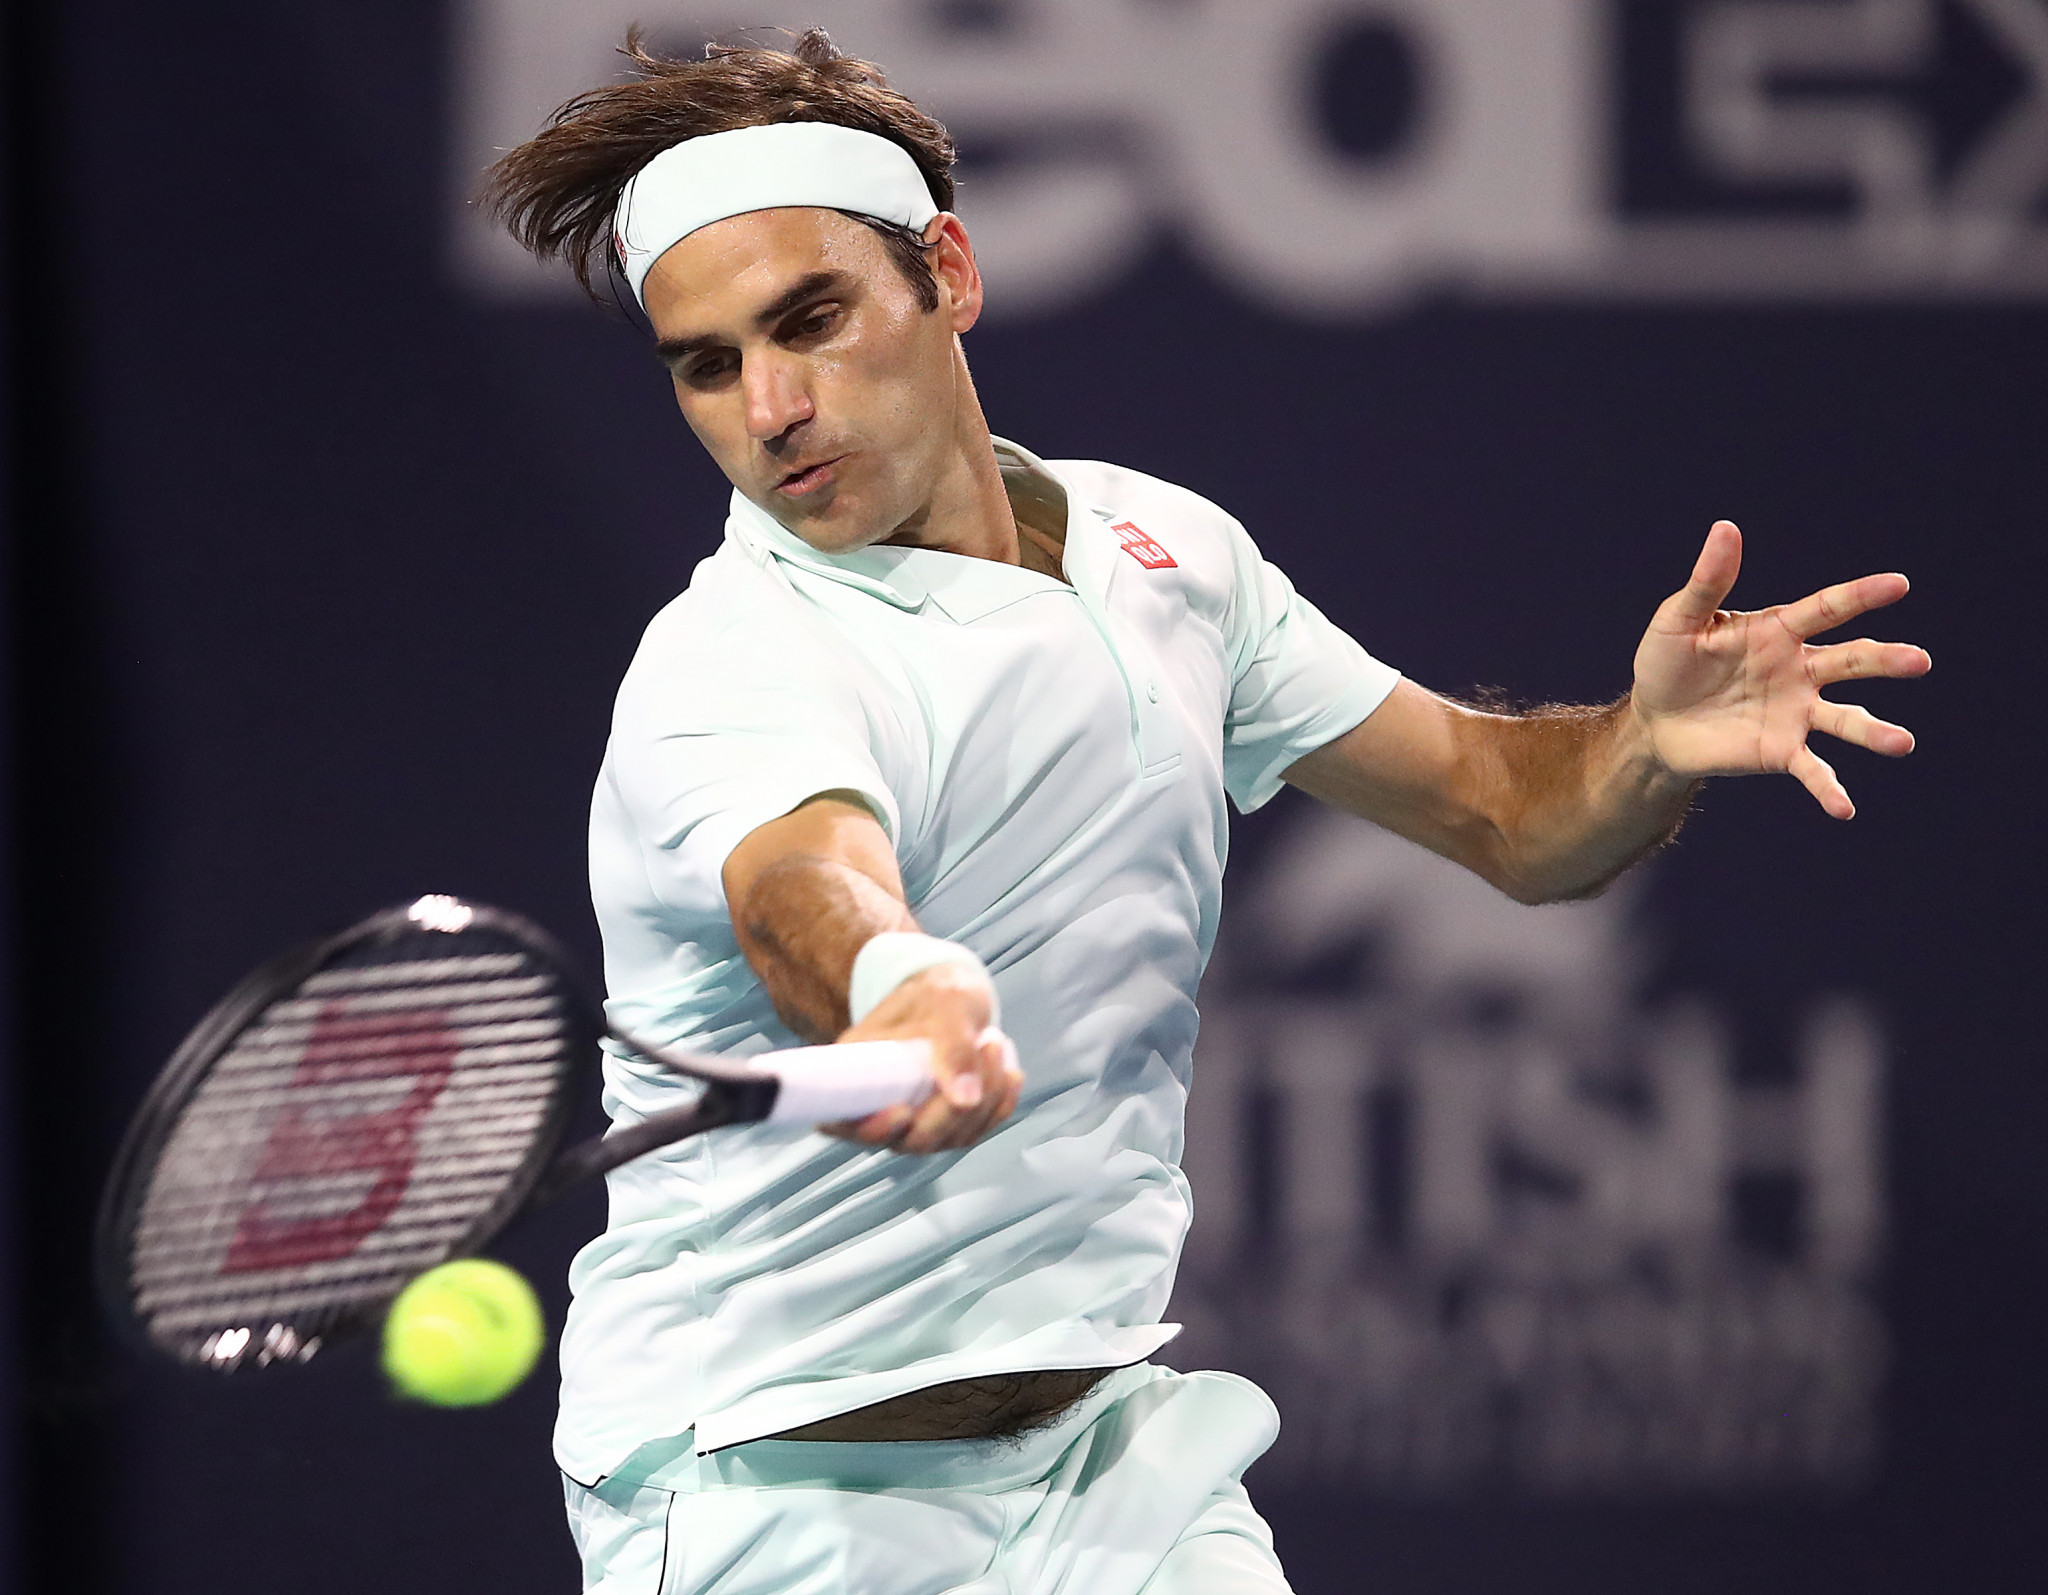 Former world number one Federer battles past qualifier Albot in Miami Open